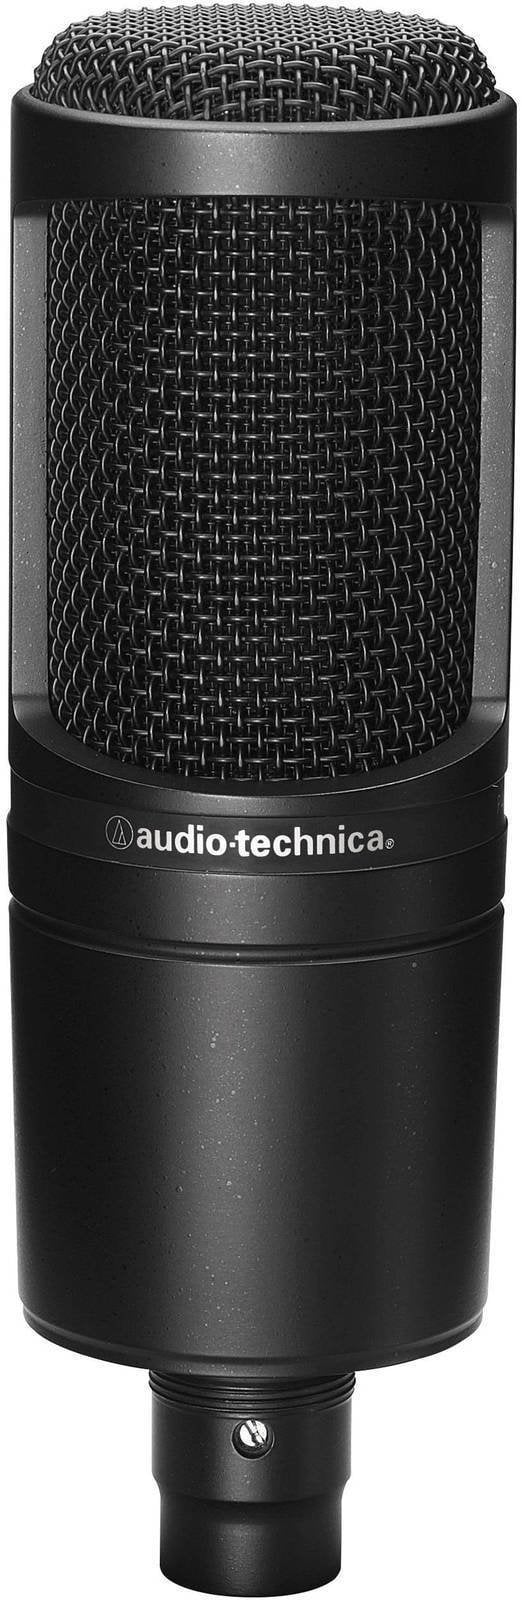 Kondenzatorski studijski mikrofon Audio-Technica AT2020 Kondenzatorski studijski mikrofon